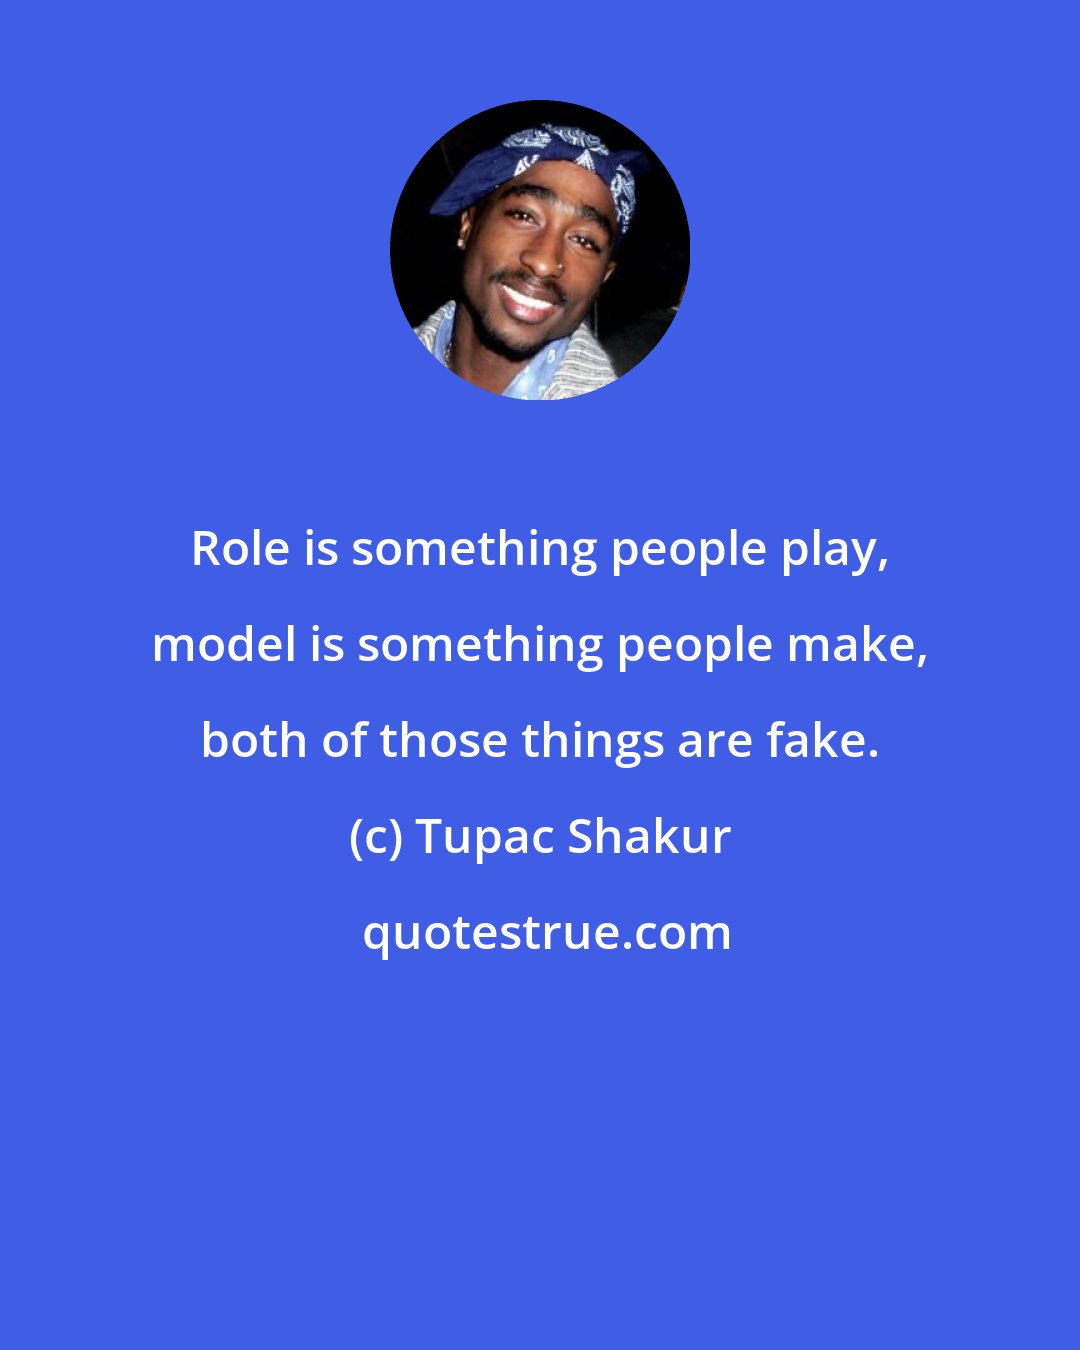 Tupac Shakur: Role is something people play, model is something people make, both of those things are fake.